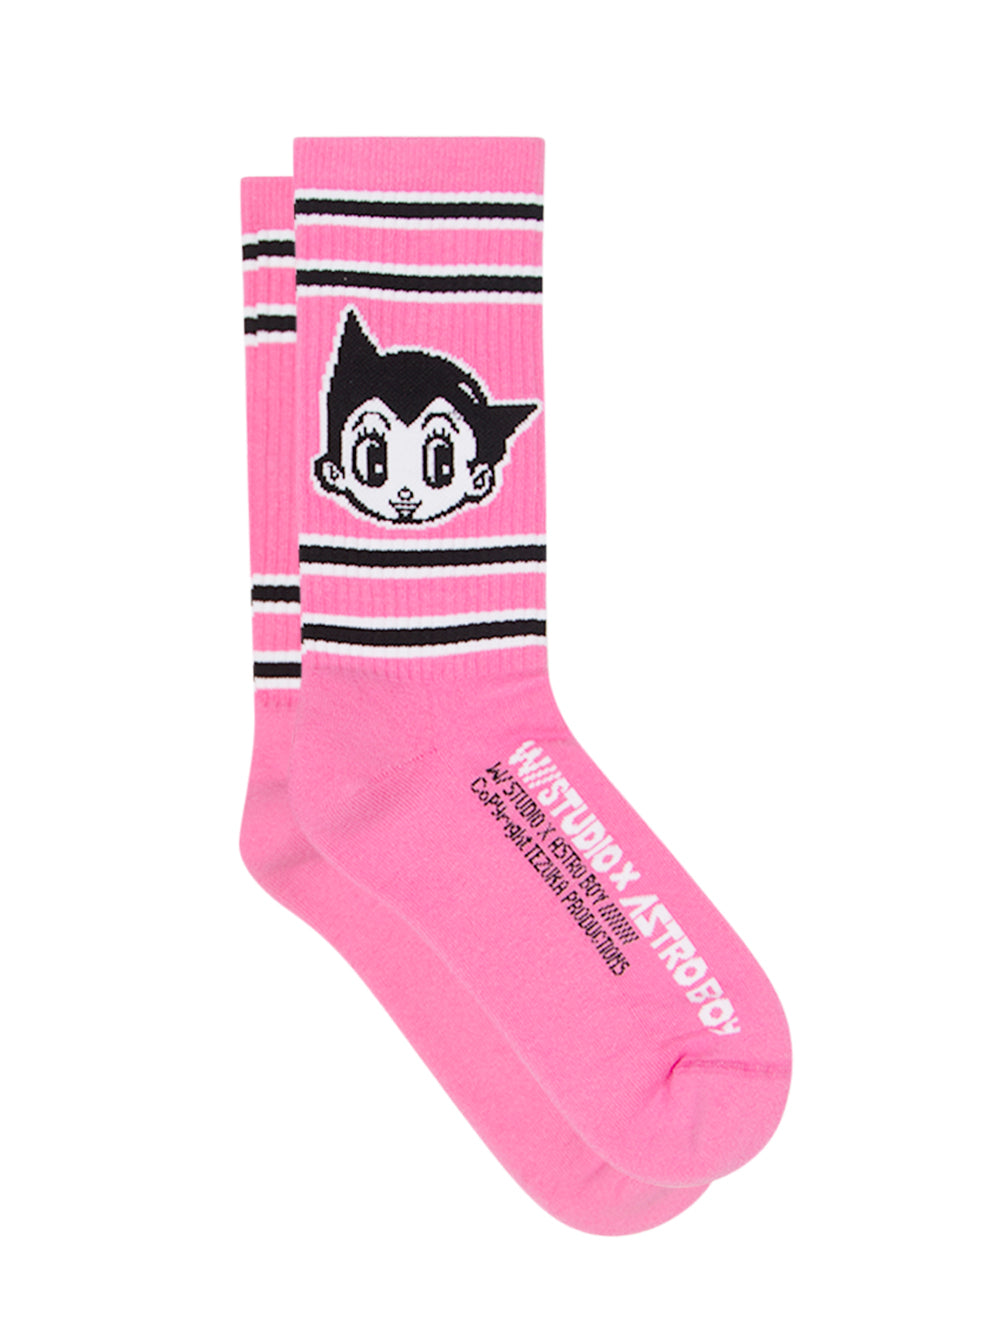 Socks Astro Boy (Pink)